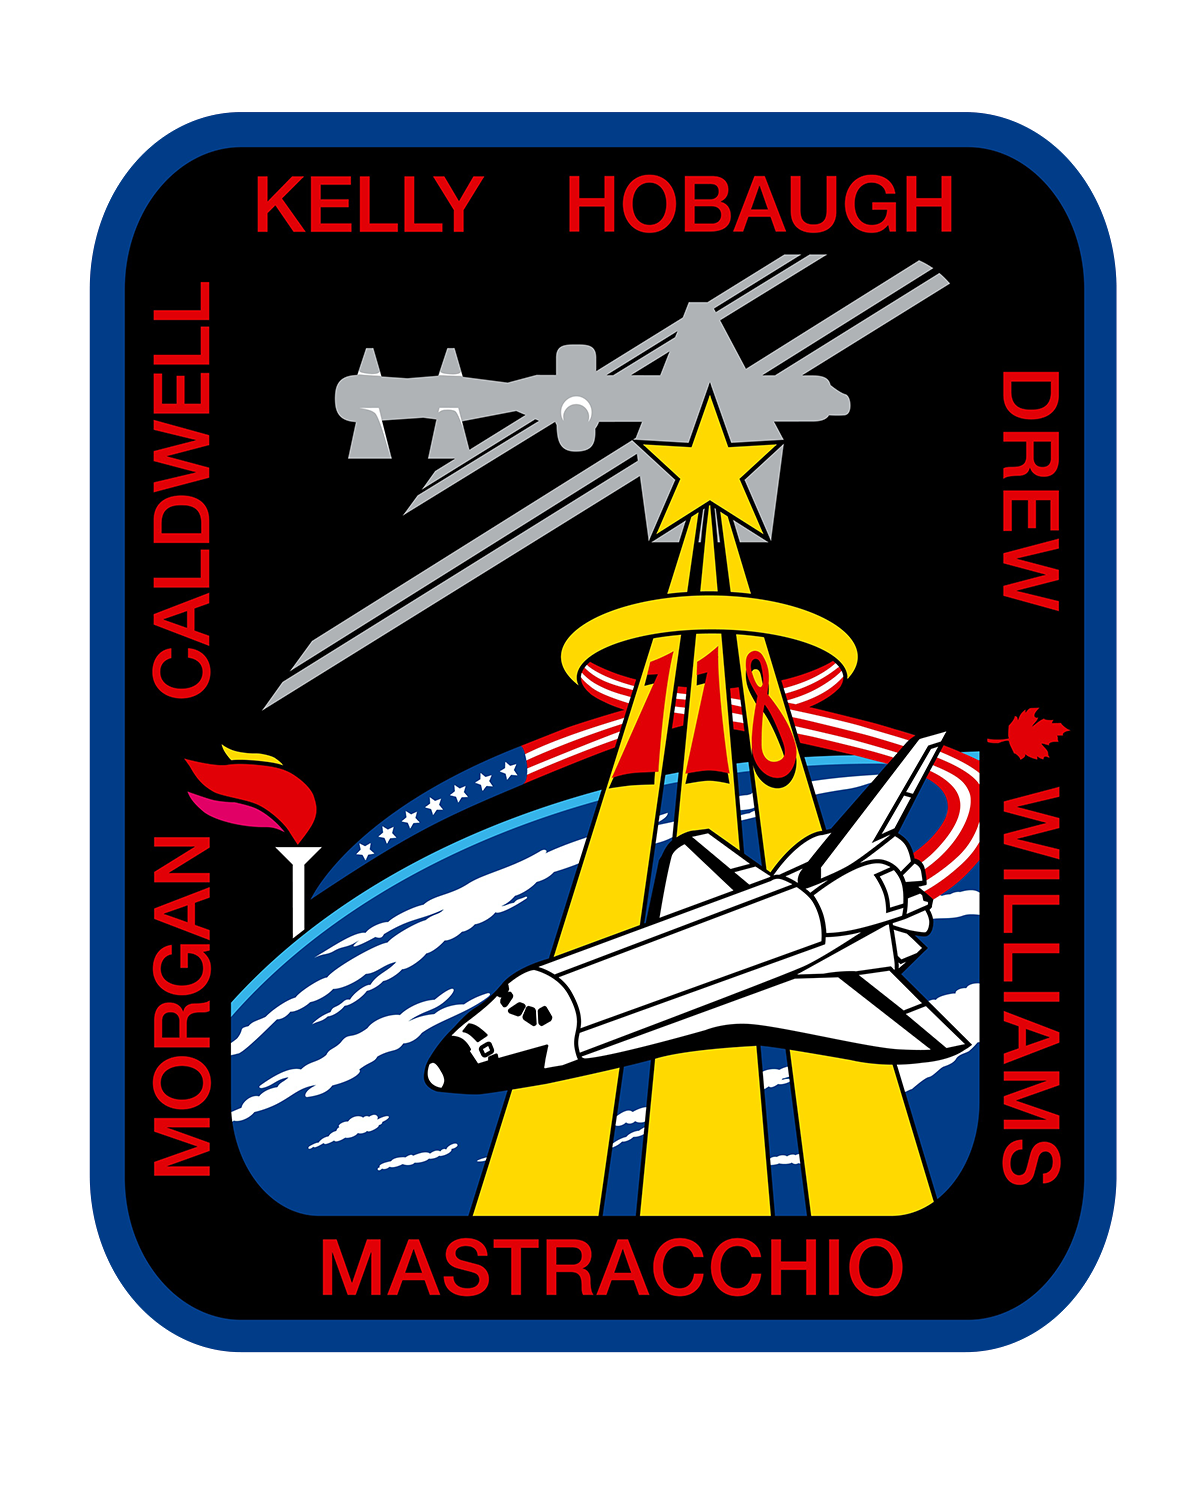 STS-118 (Endeavour)